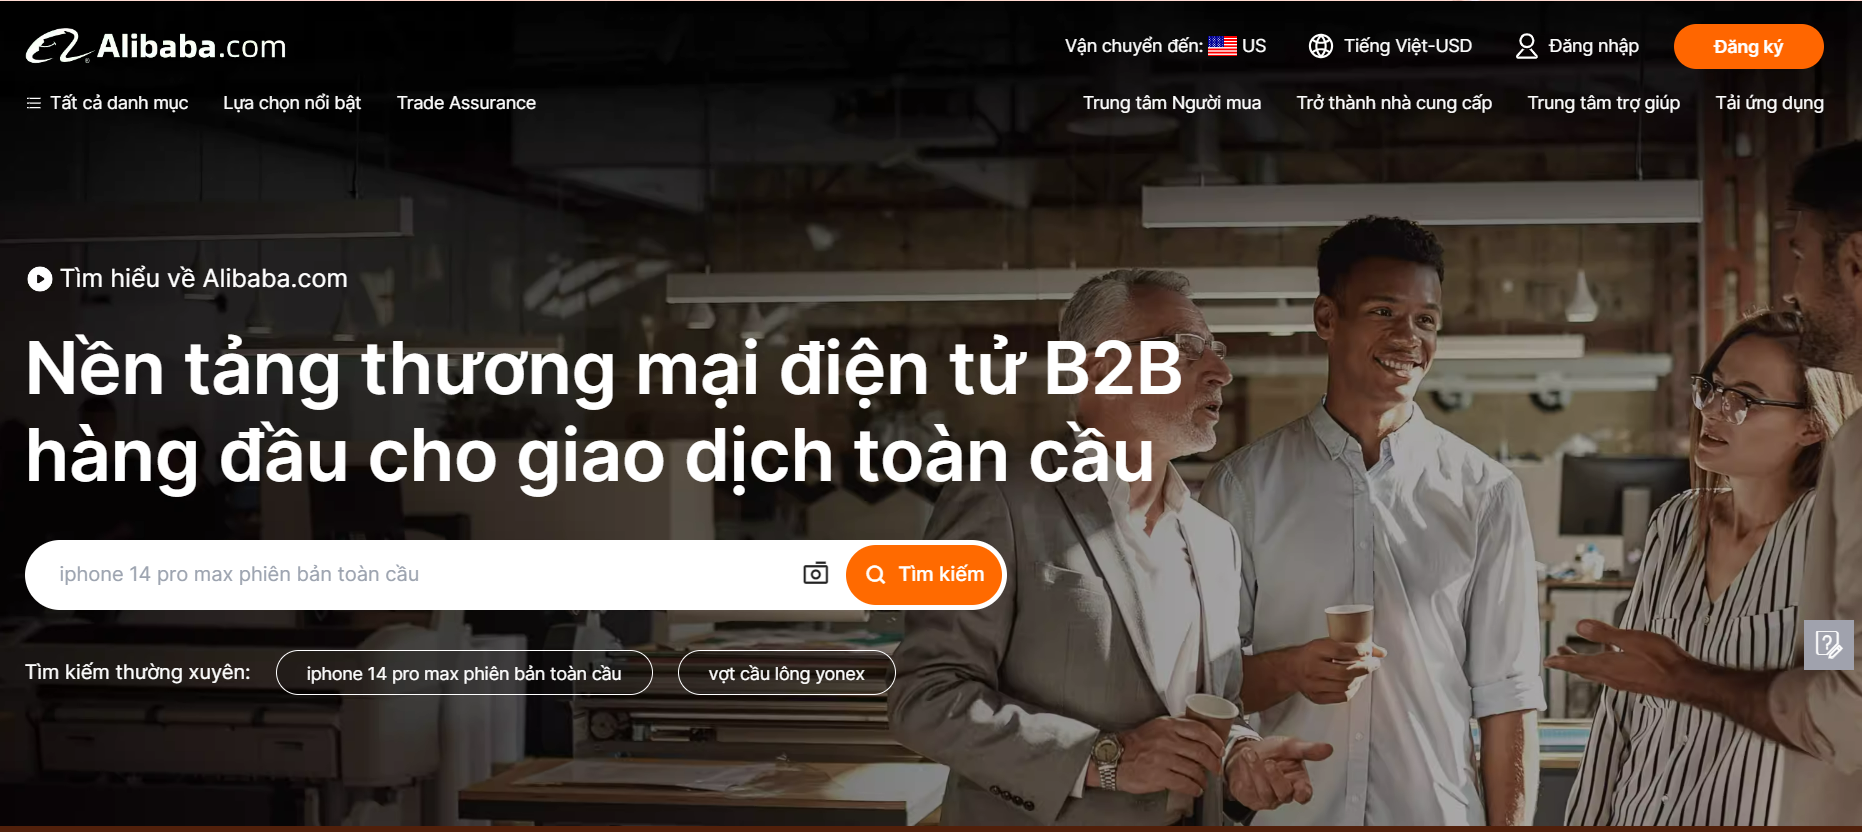 Trang web kiếm tiền Alibaba